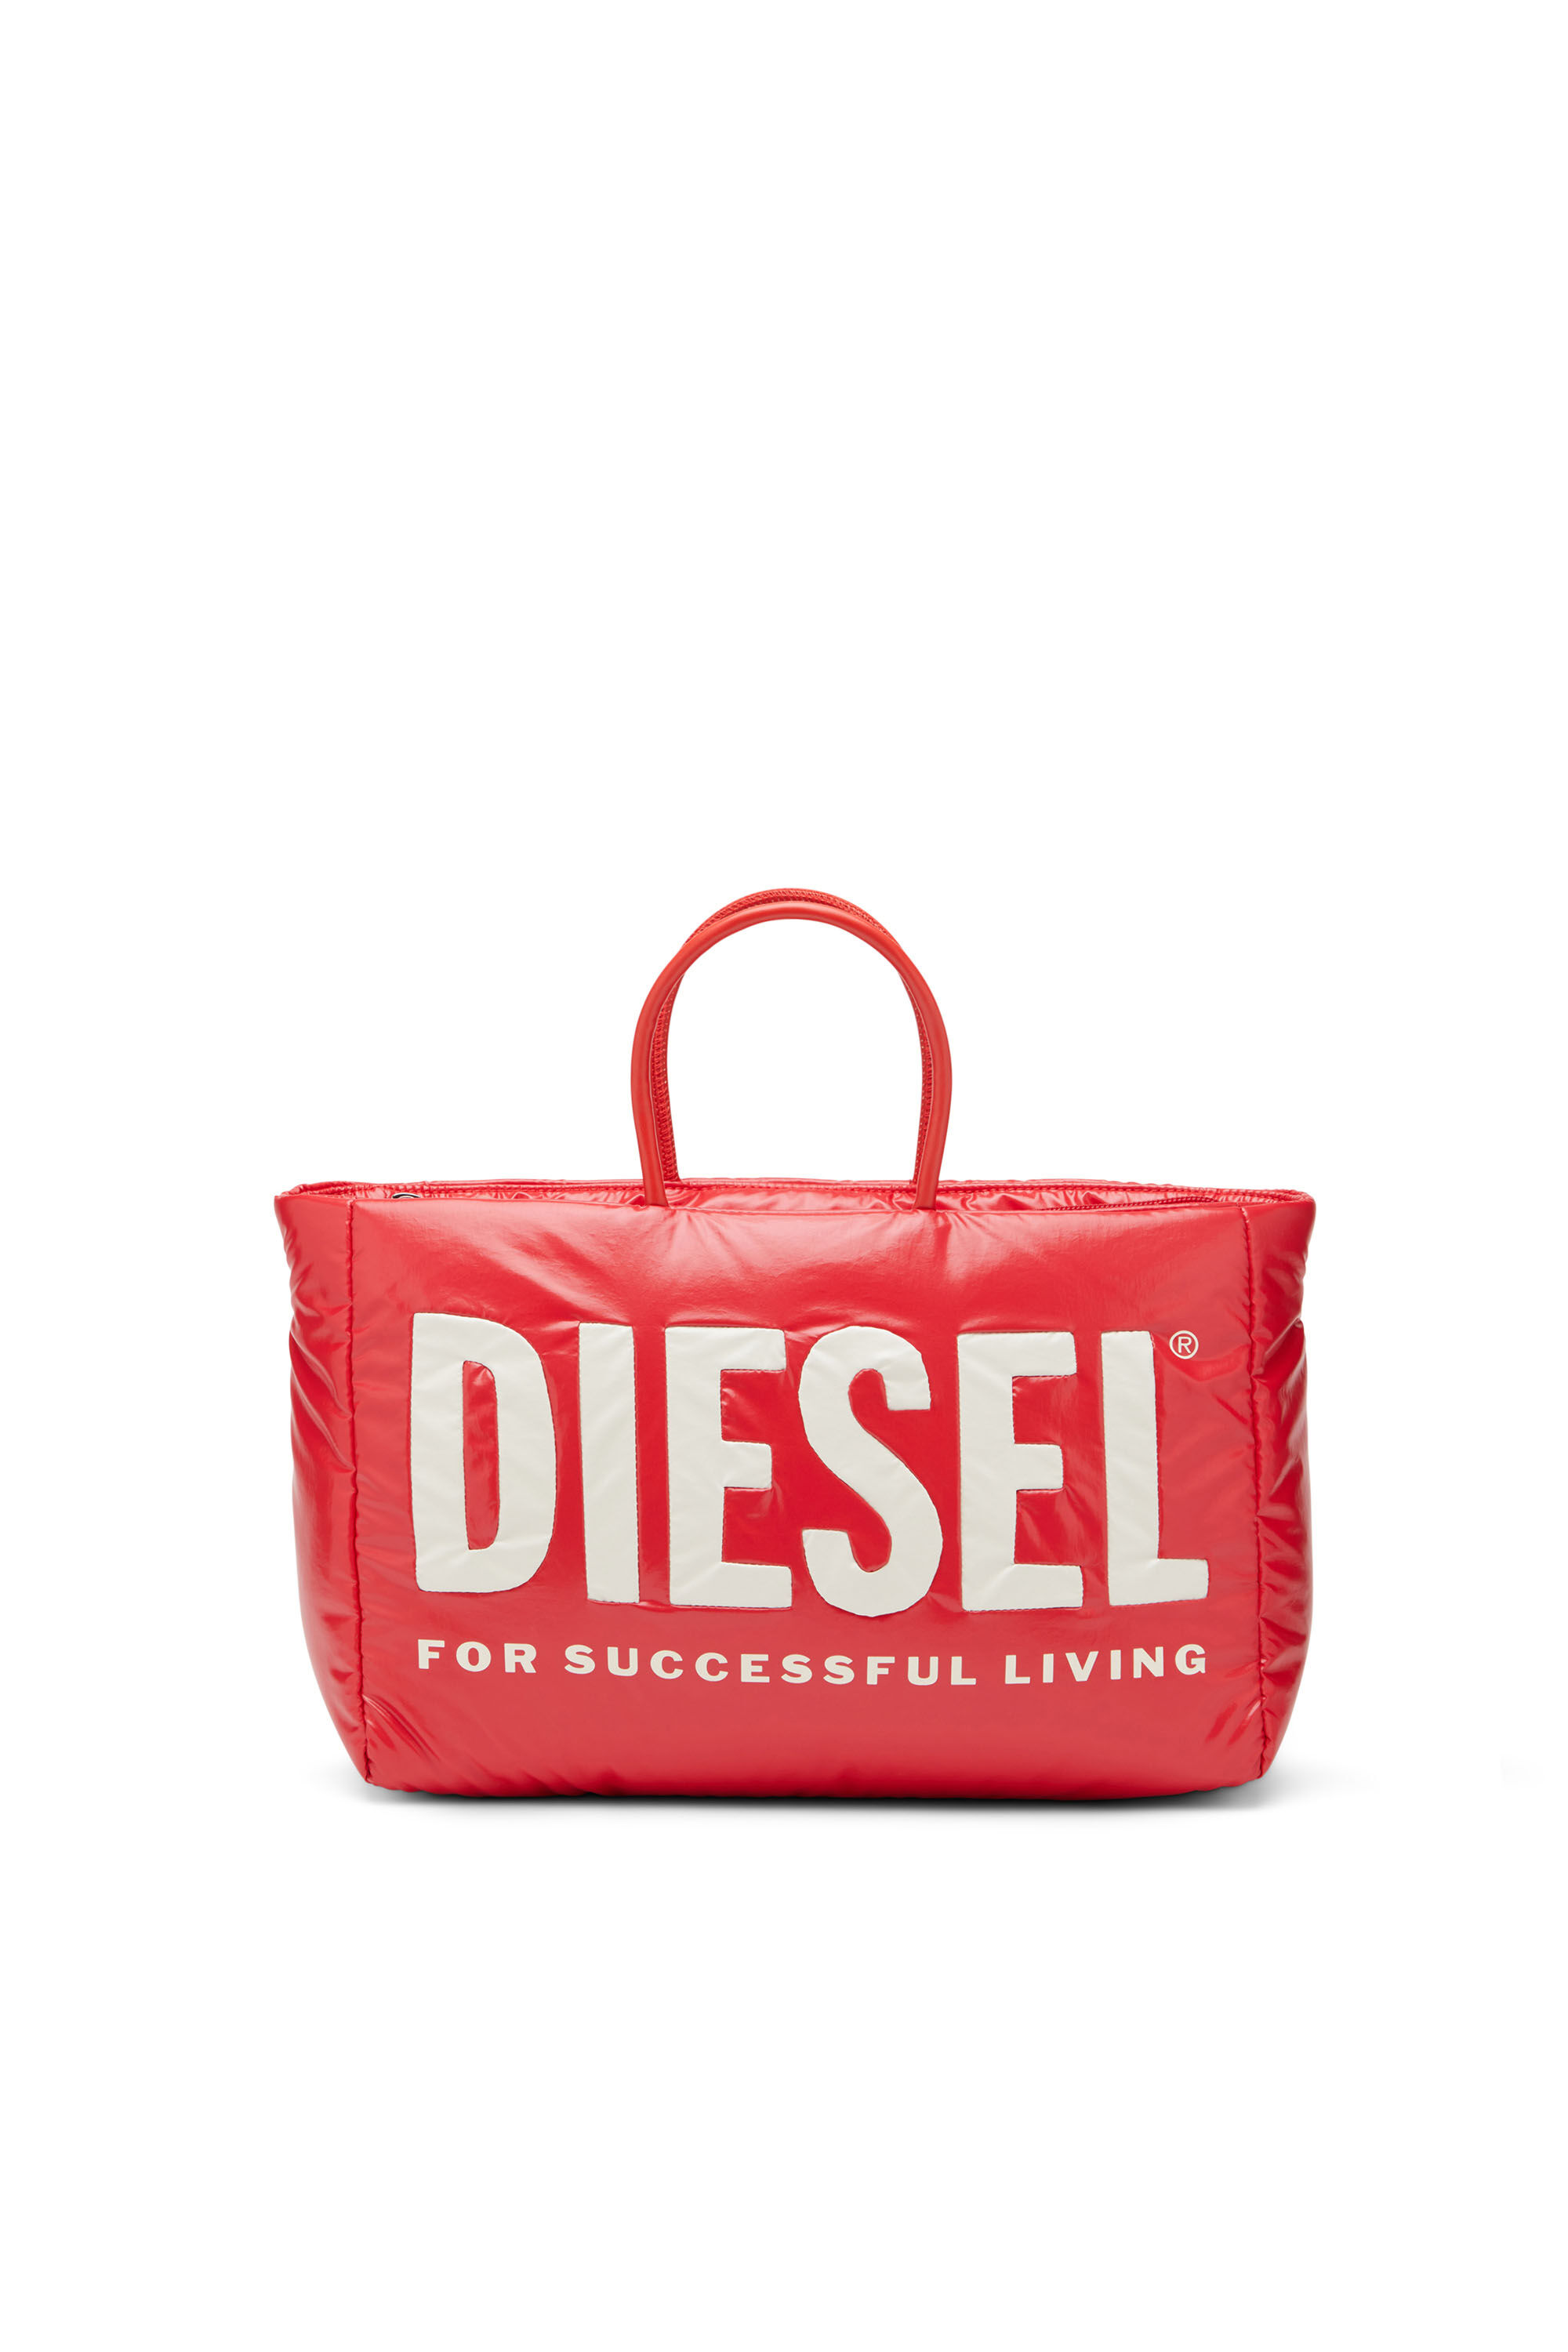 Diesel - PUFF DSL TOTE M X, Red - Image 2